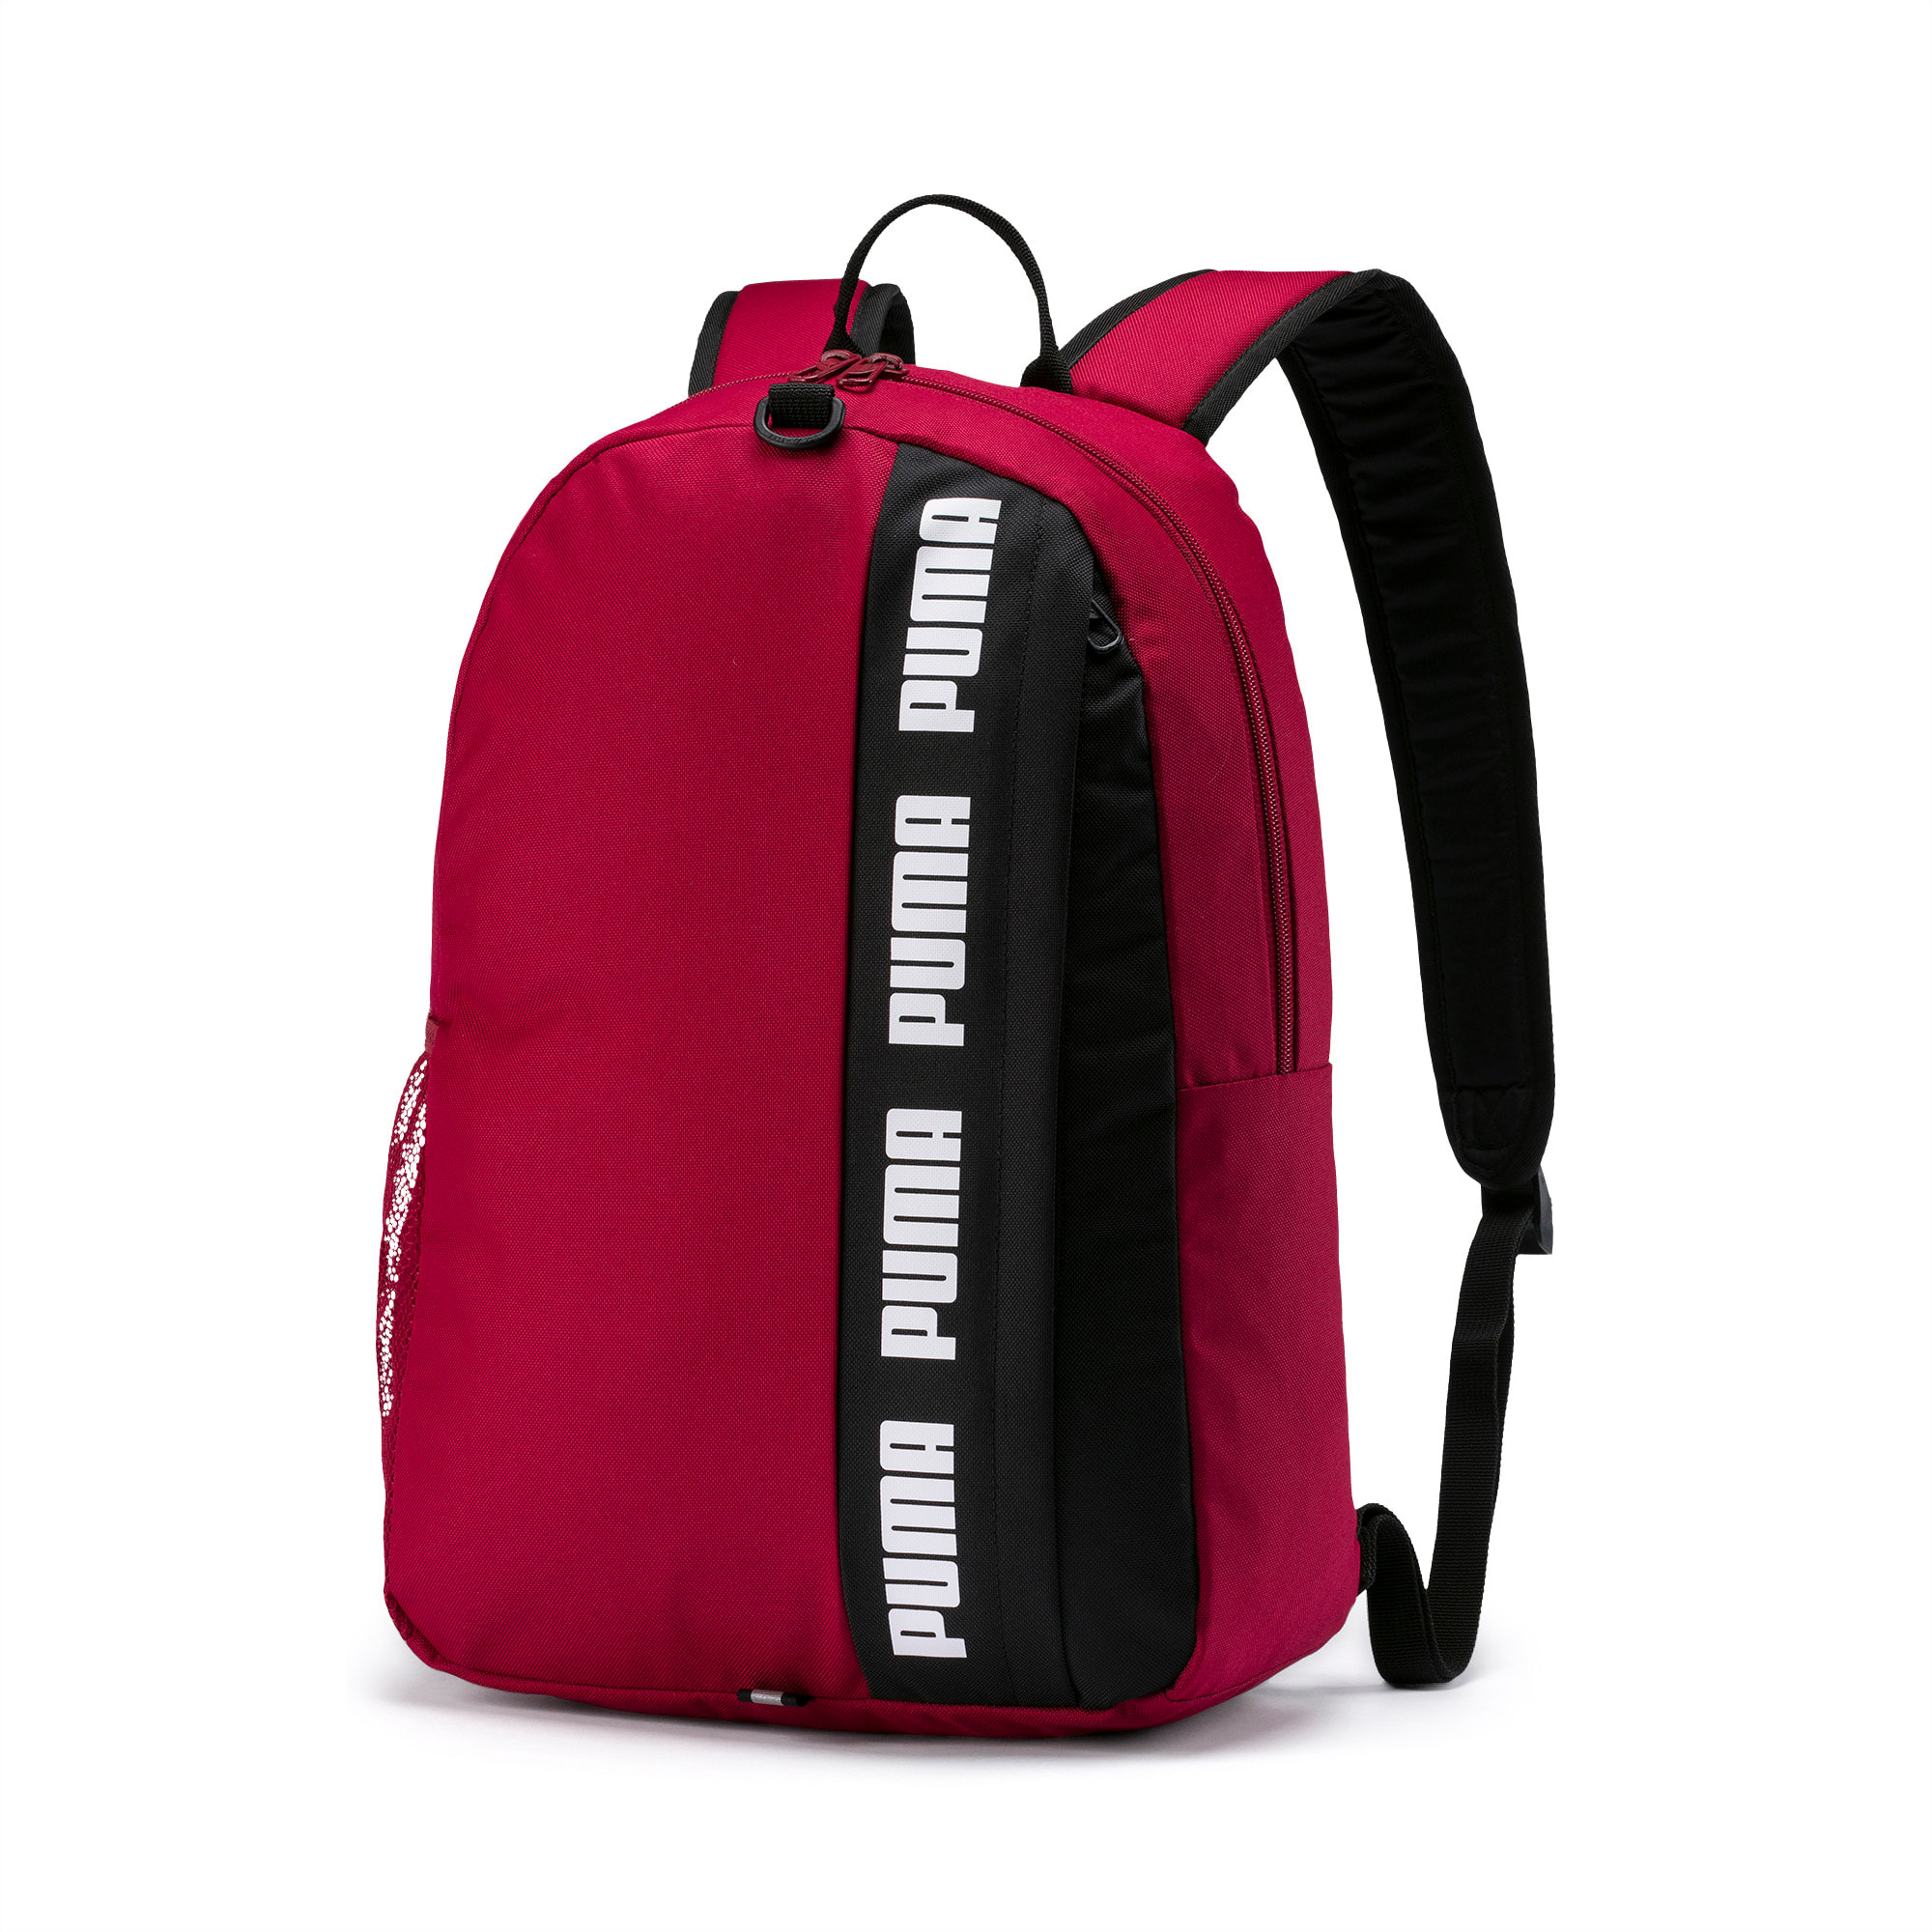 puma large backpack